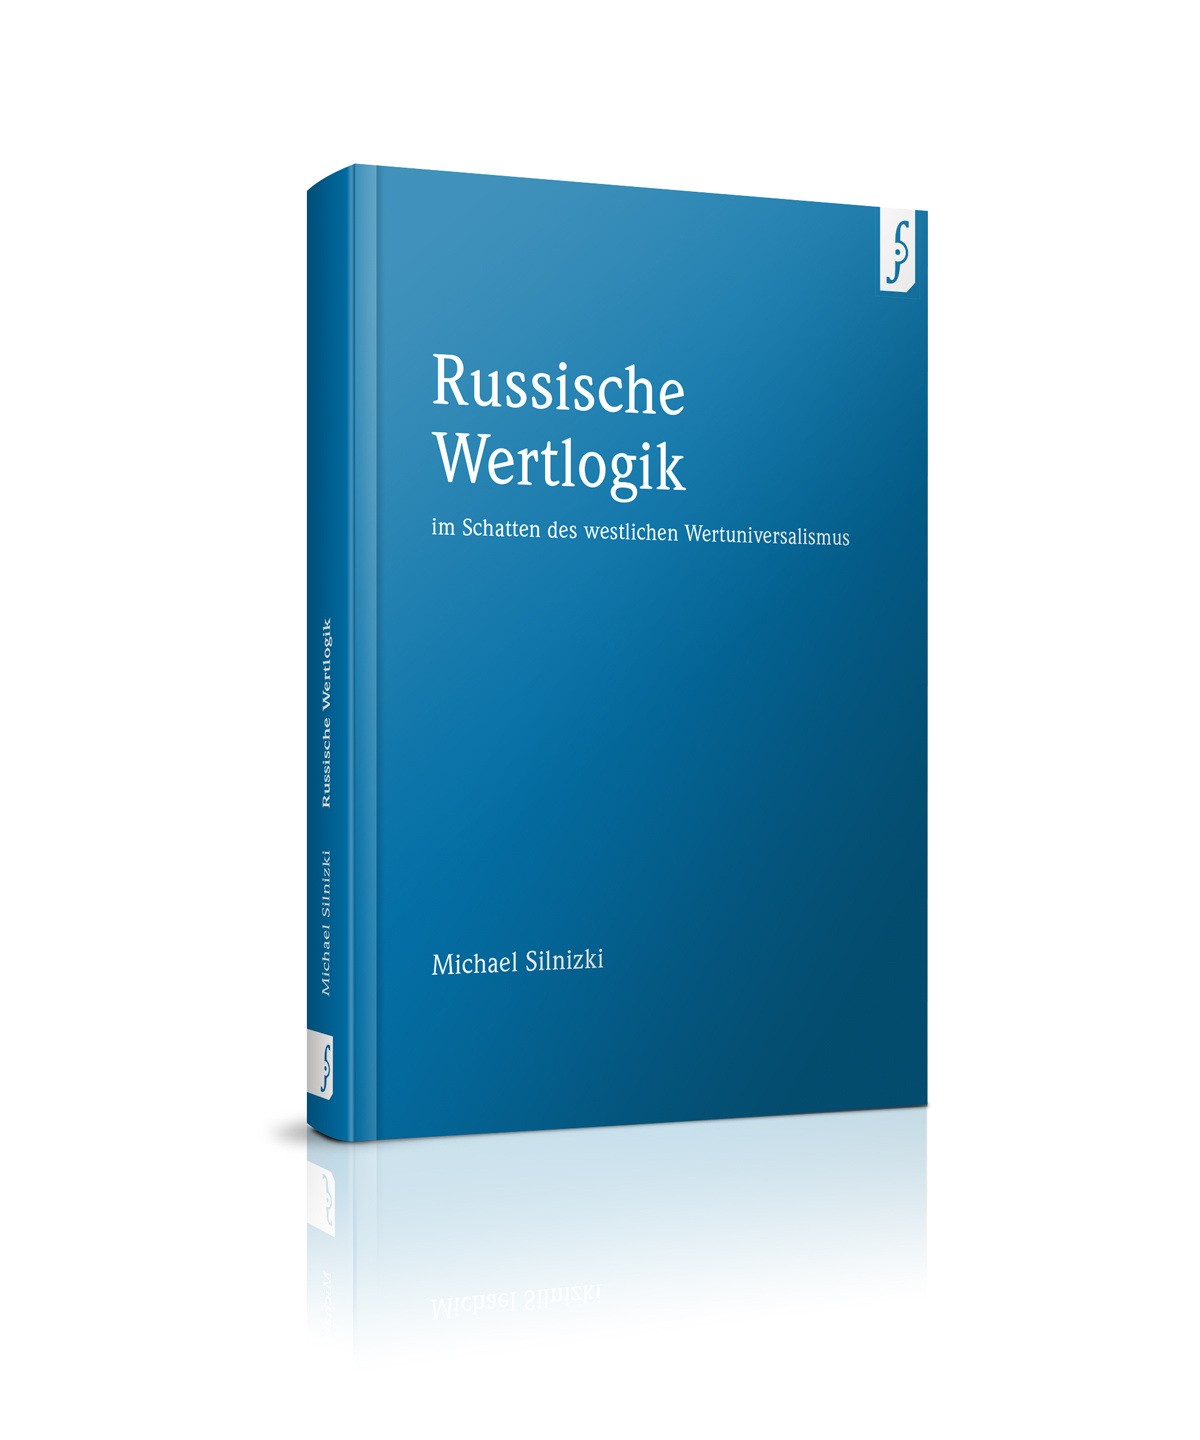 Russische Wertlogik - ISBN 978-3-9816169-2-7, 182 S. 49,90 € (D)